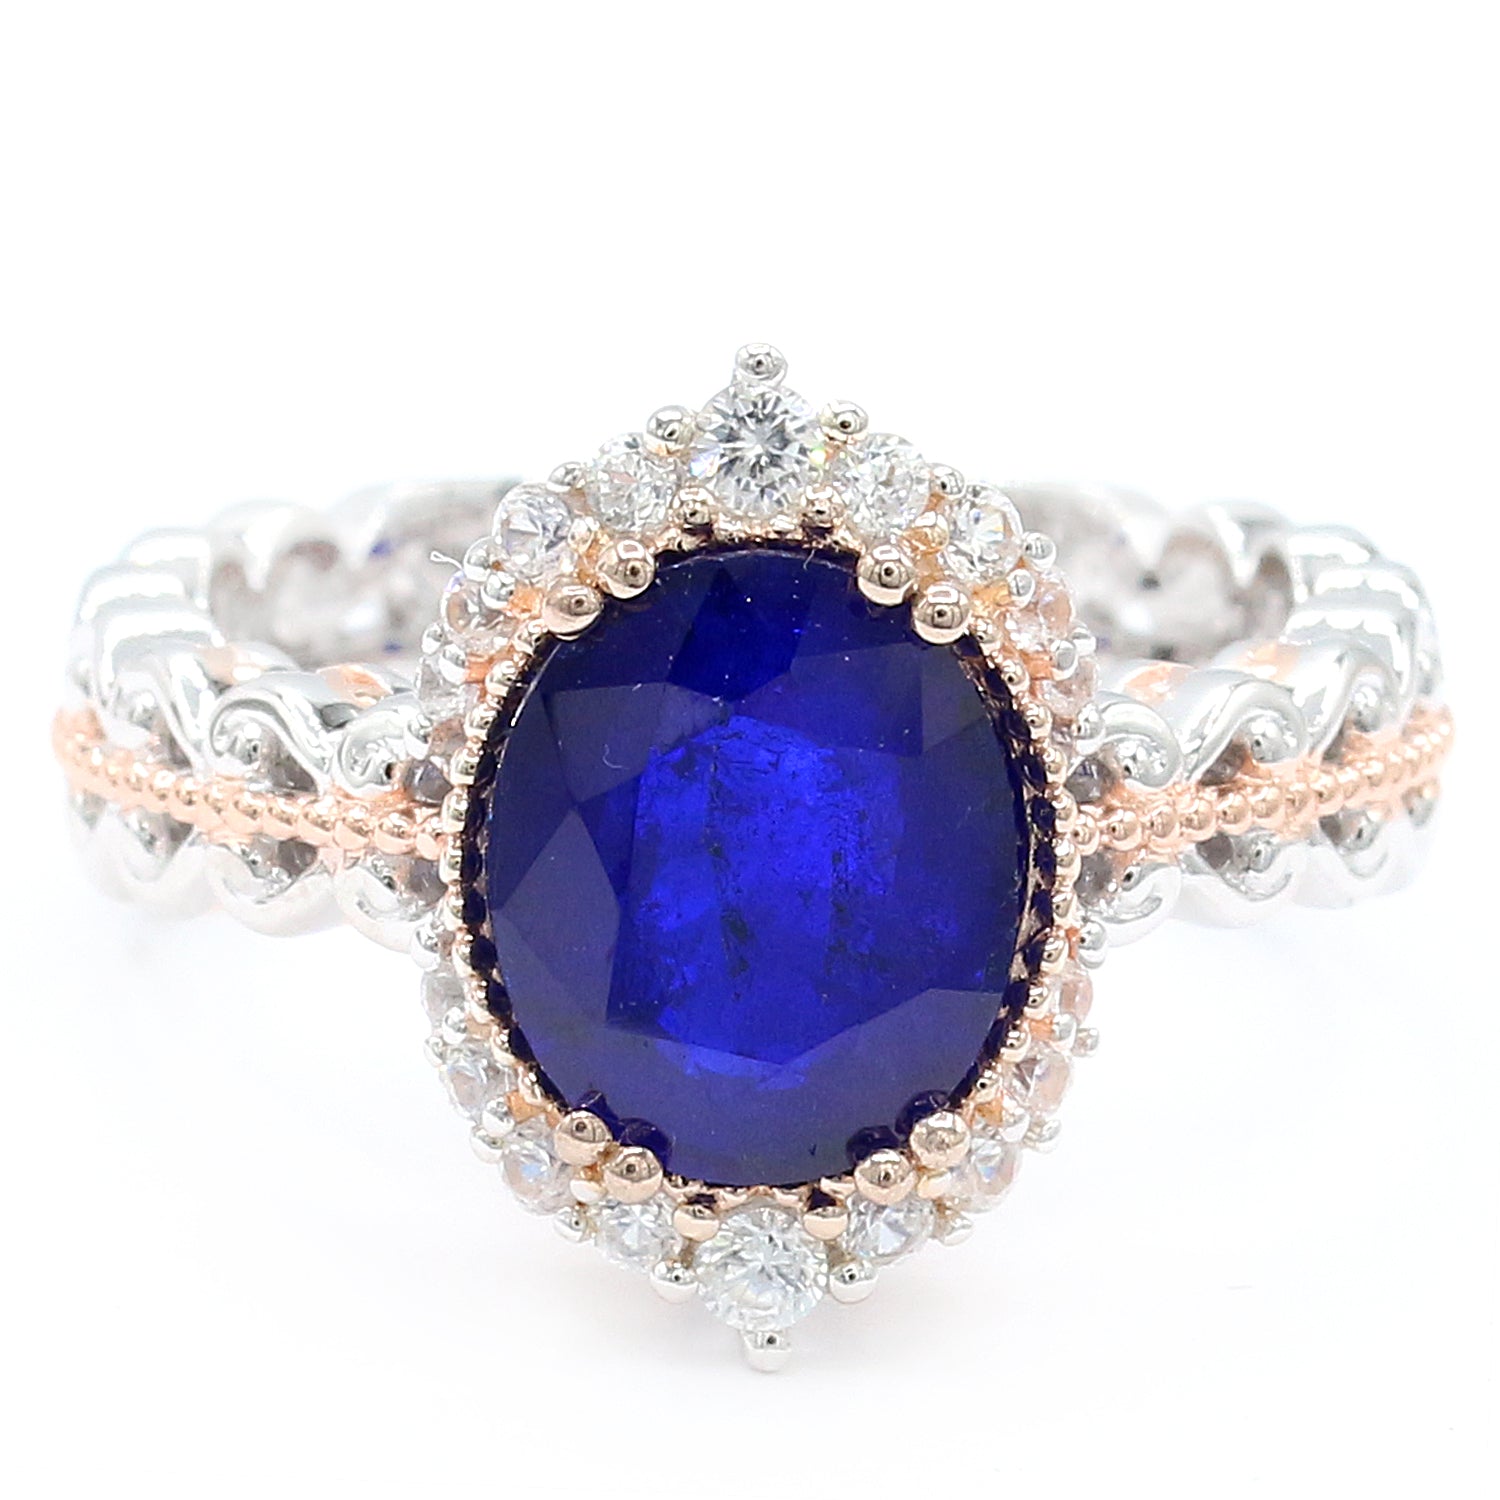 Limited Edition Gems en Vogue 5.27ctw Cobalt Blue Spinel & White Zircon Ring